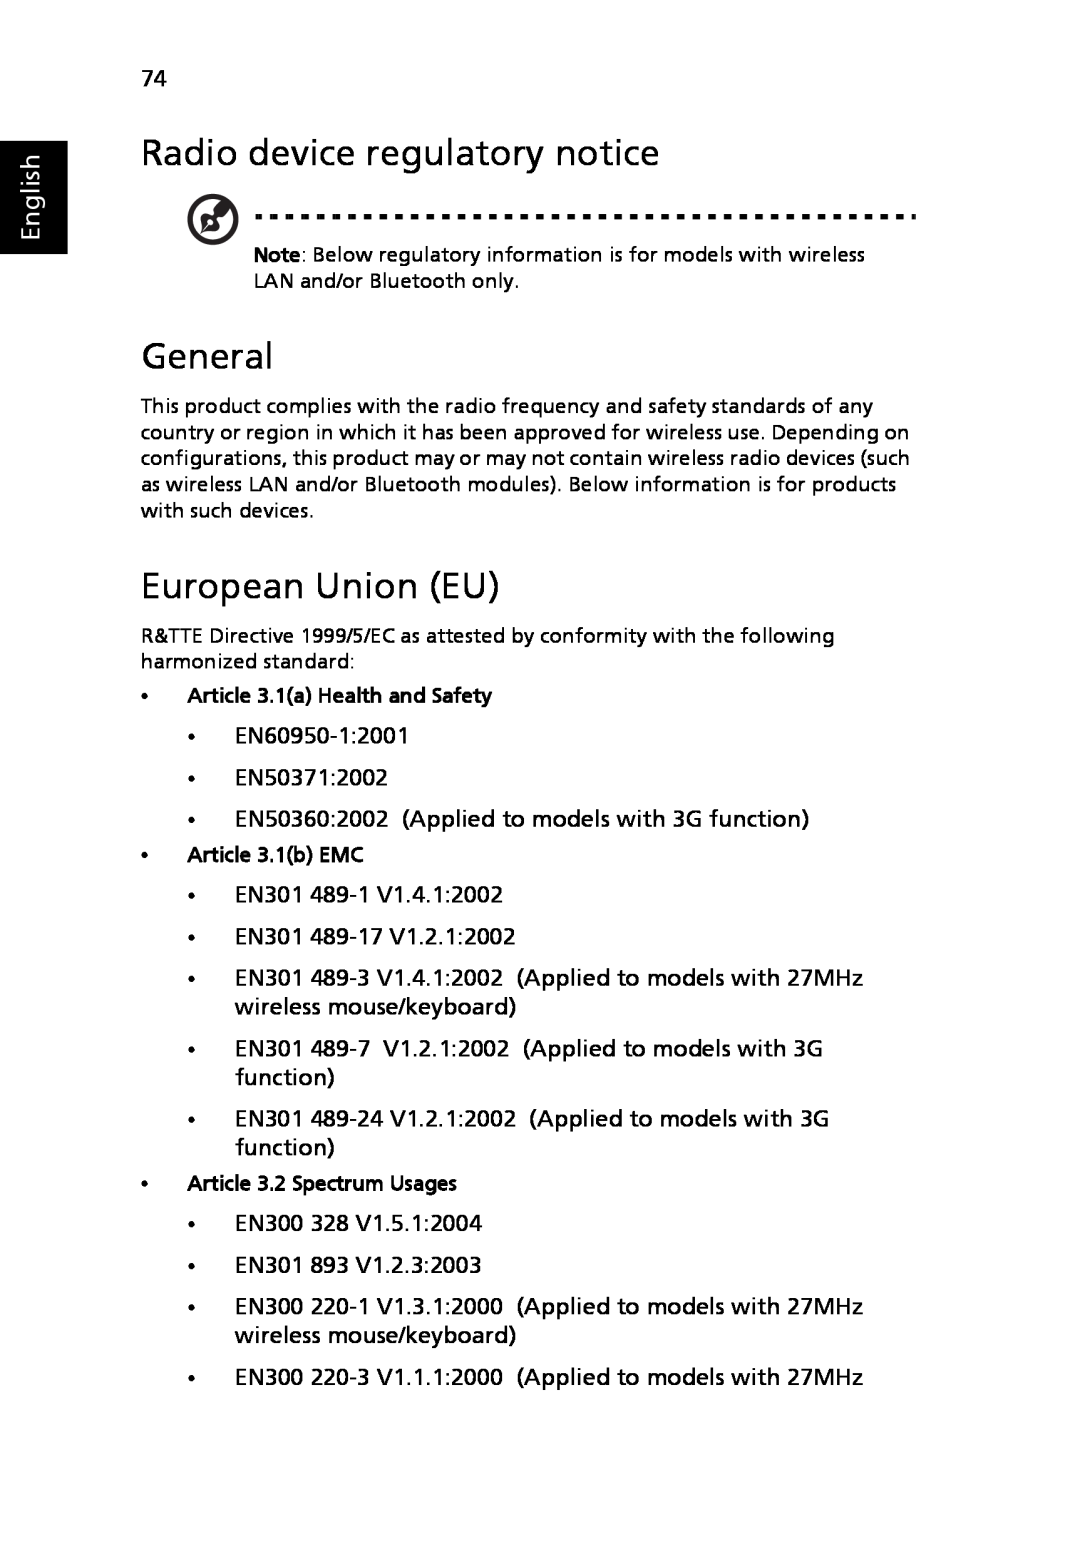 Acer 3030 Series, 3040 Series manual Radio device regulatory notice, General, European Union EU, English 